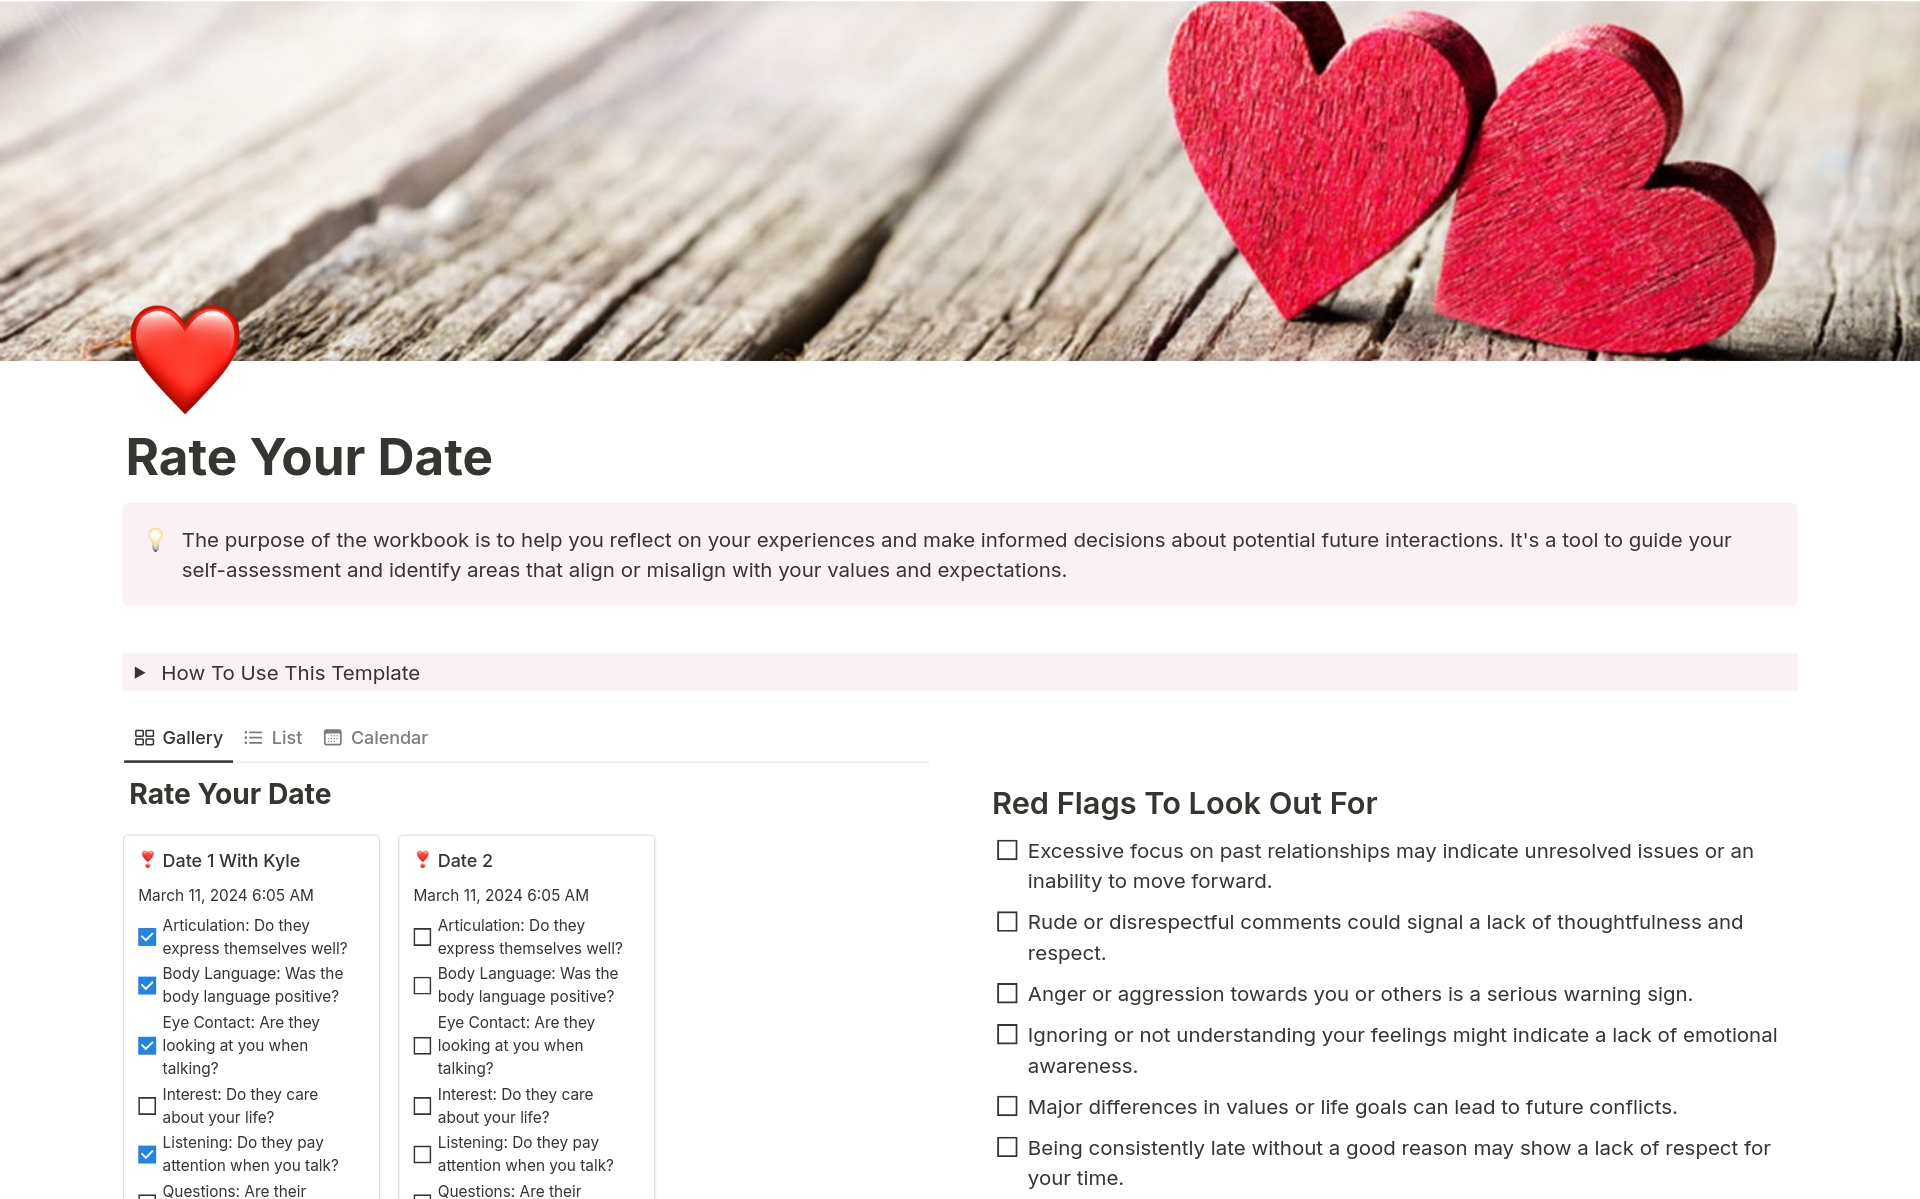 Vista previa de plantilla para Rate Your Date